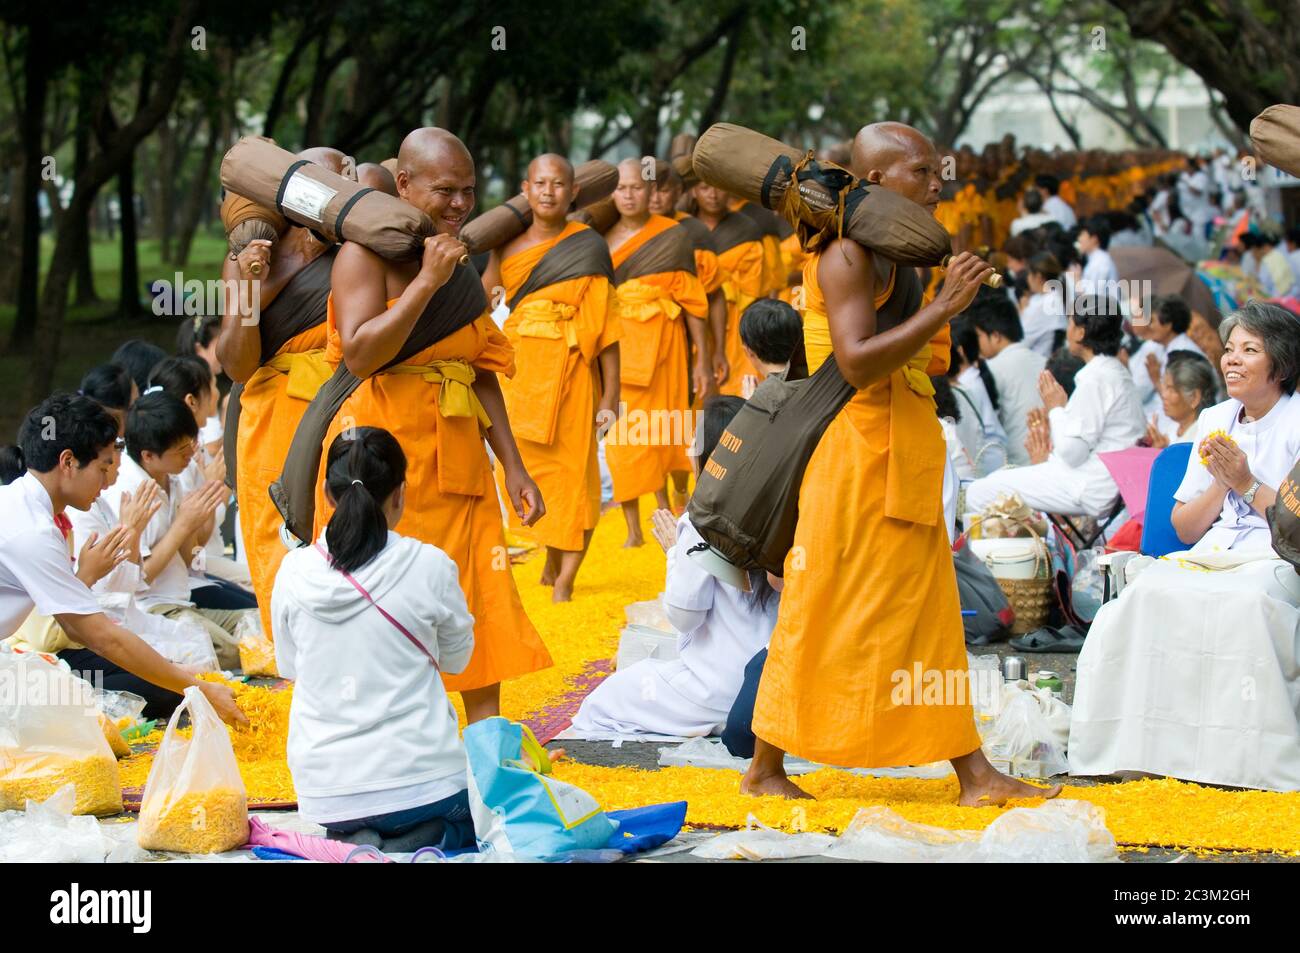 PATHUM THANI - JANUARYÊ27: 1,128 Buddhist monks wandering 460km through Bangkok and surroundings on yellow petals on JanuaryÊ27, 2013 in Pathum Thani, Stock Photo